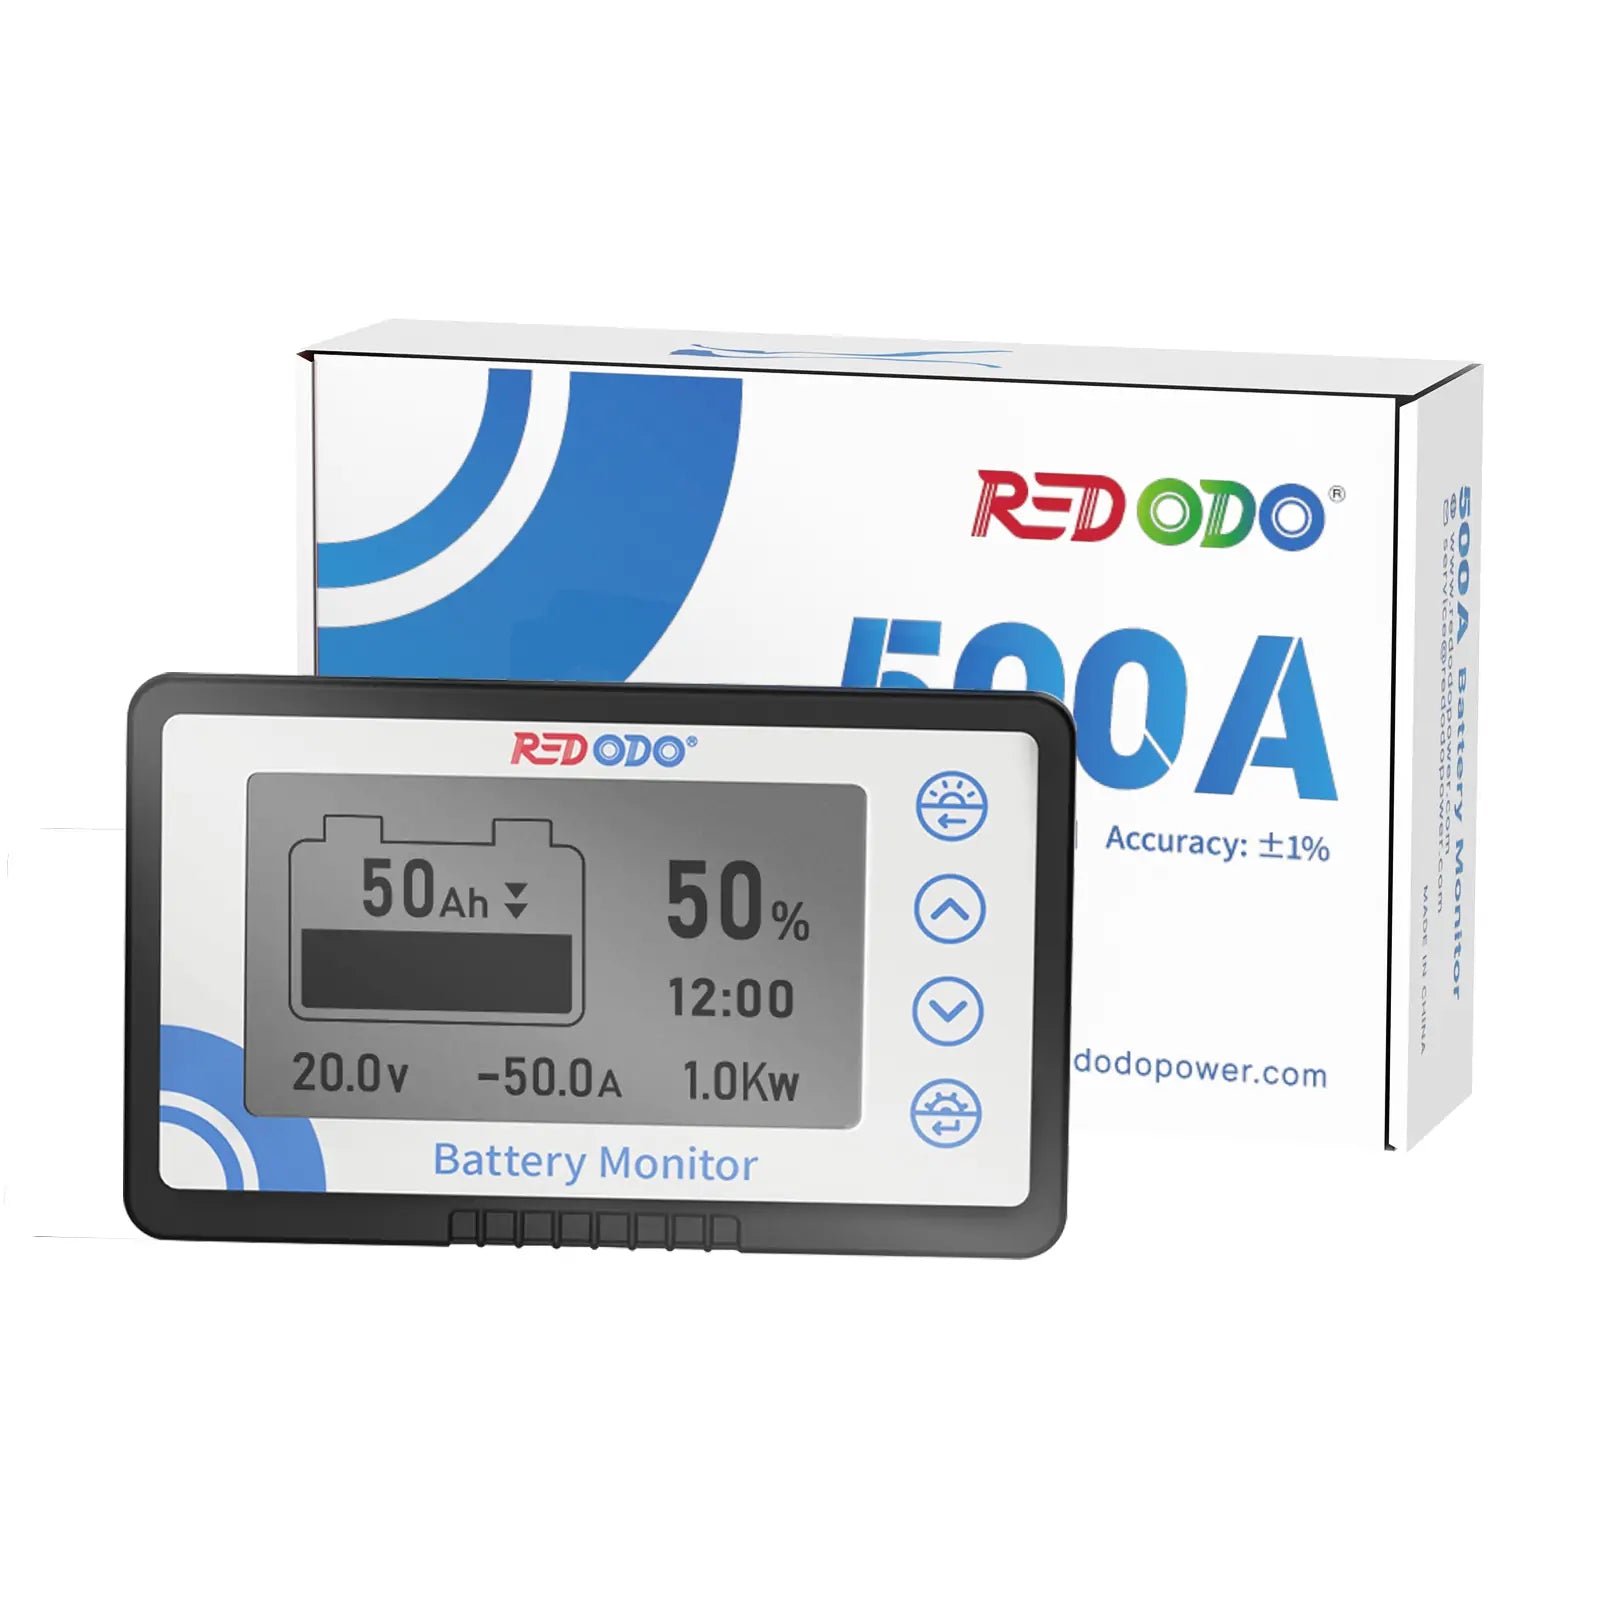 【Auto $10 OFF】Redodo 500A Battery Monitor with Shunt Redodo Power